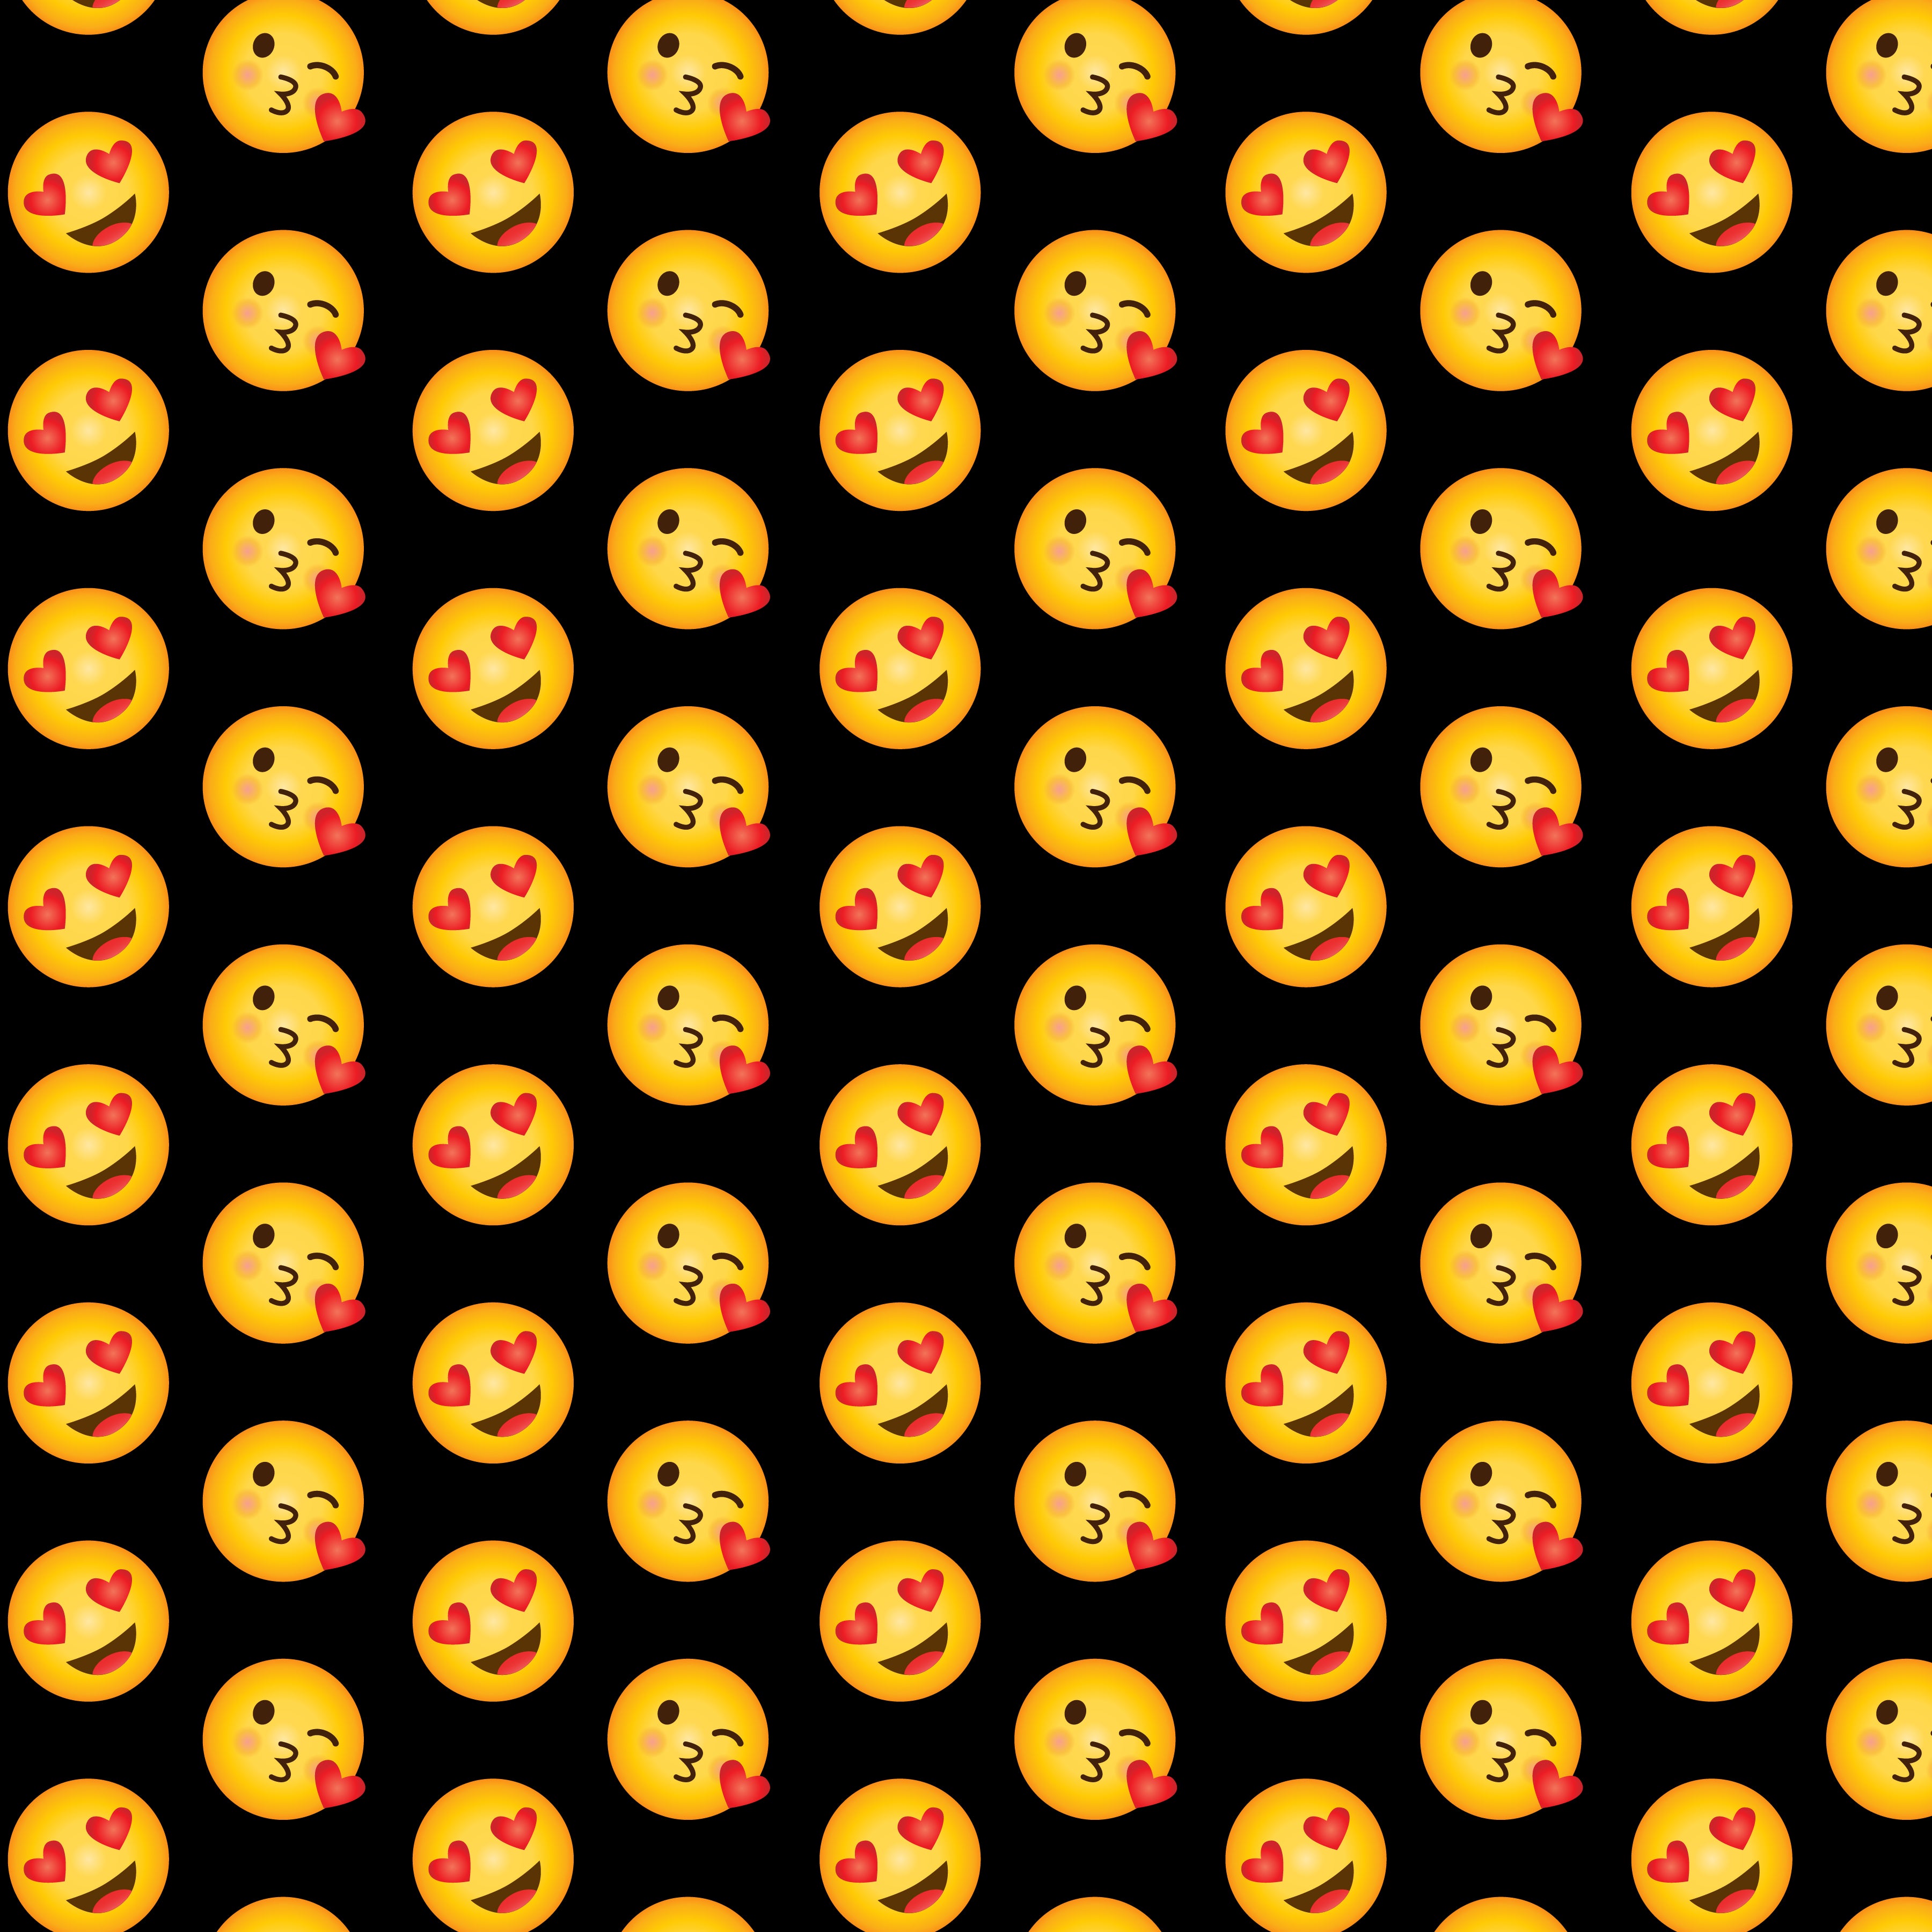 Emoji Faces Patterned Vinyl 12" x 12" - The Vinyl Haus